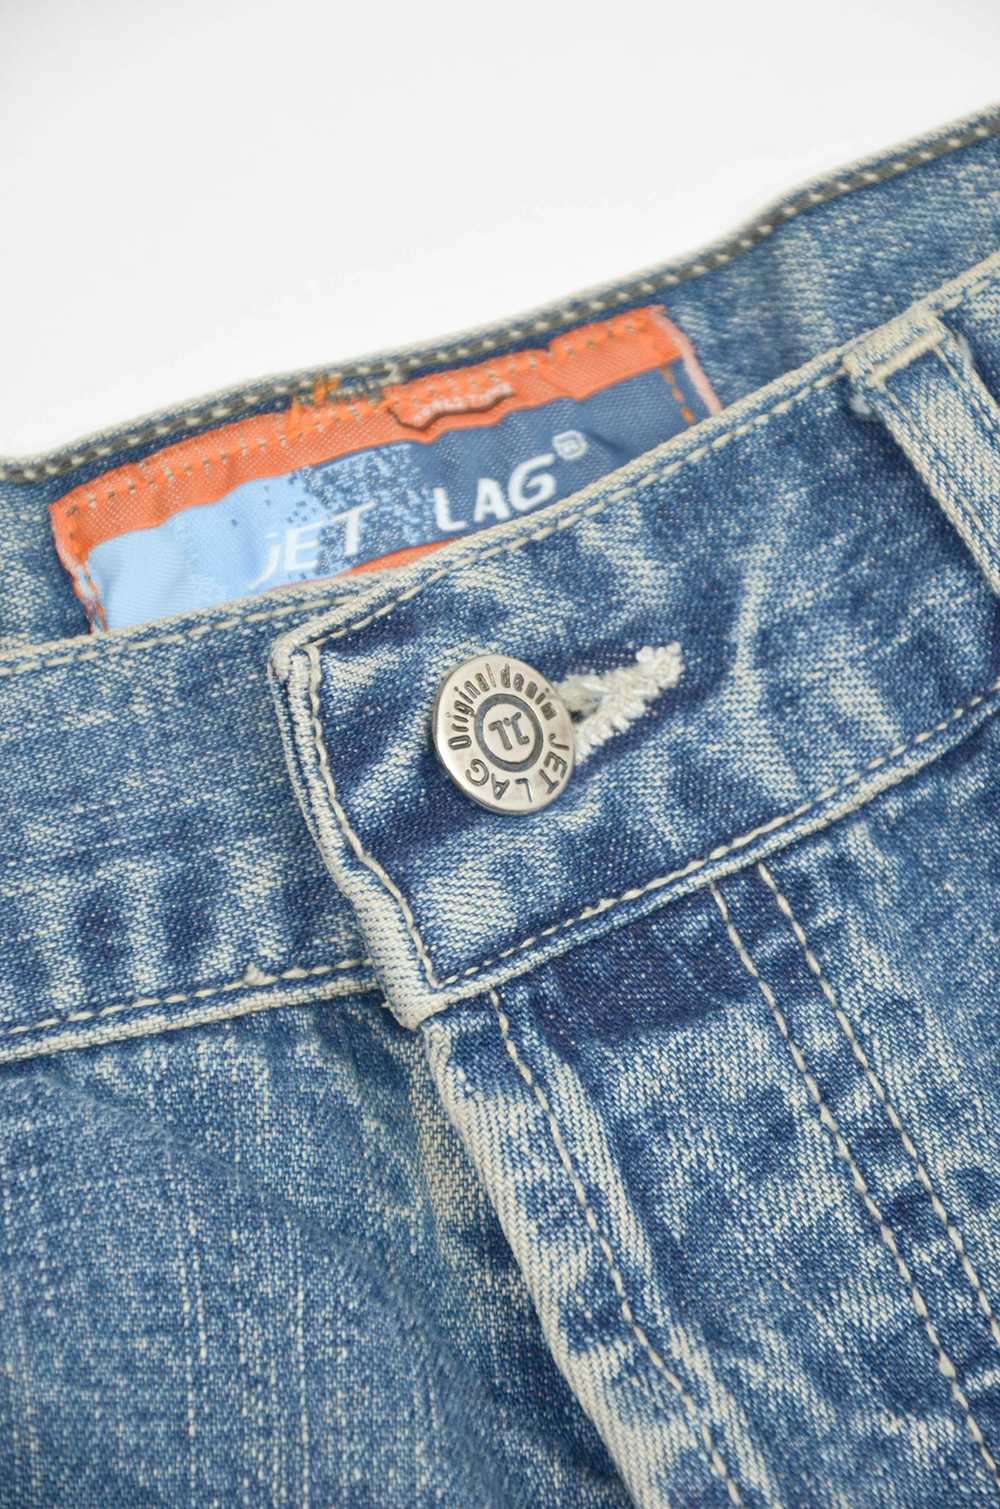 Jet Lag JET LAG Vintage Half Corduroy Jeans - image 5